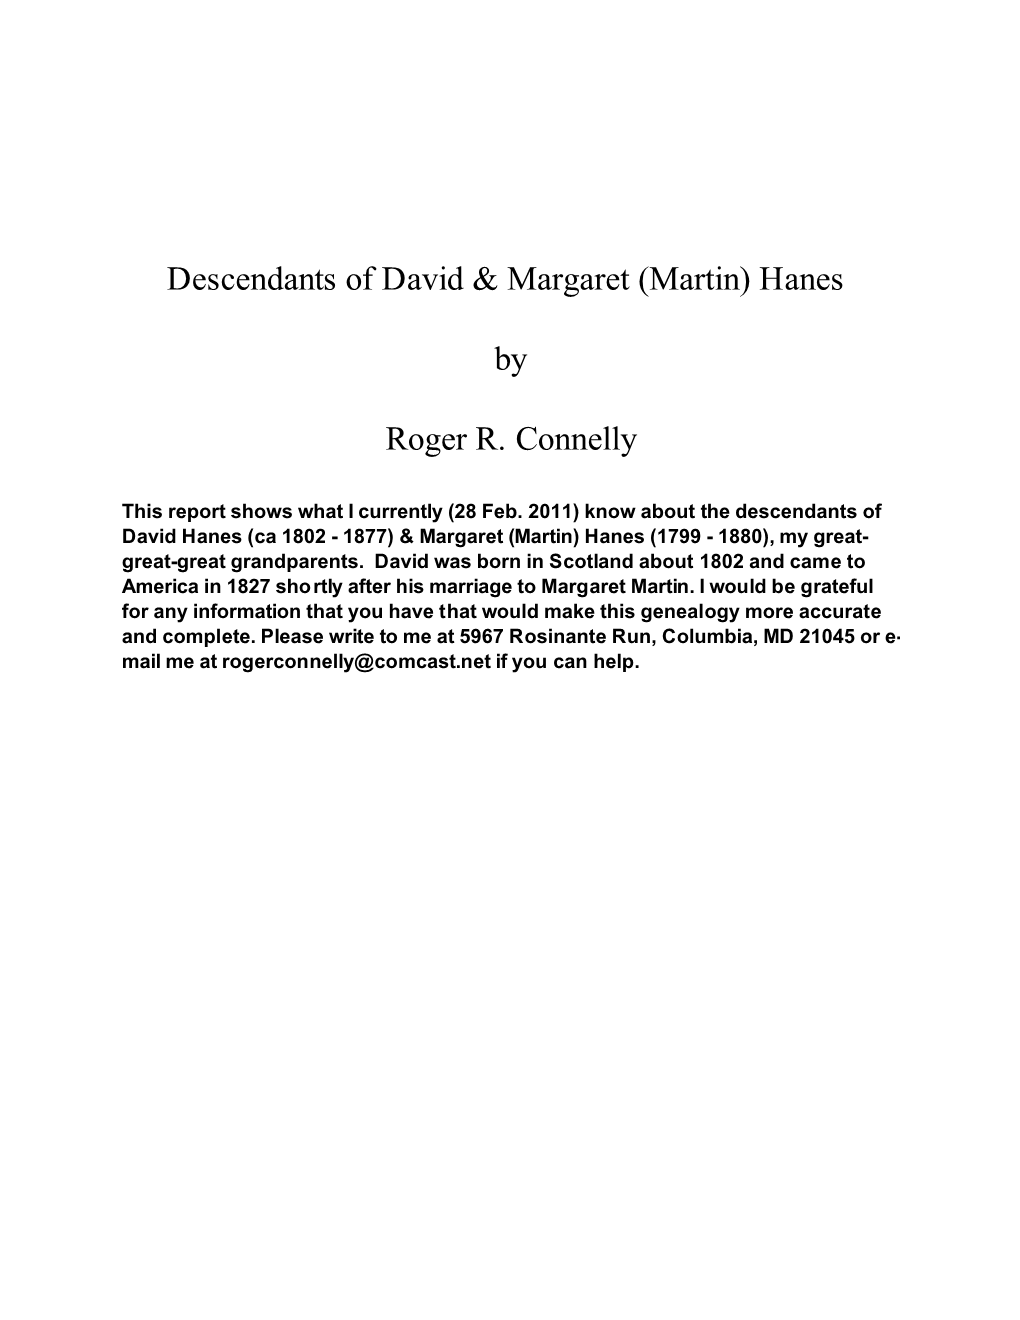 Descendants of David & Margaret (Martin) Hanes by Roger R. Connelly